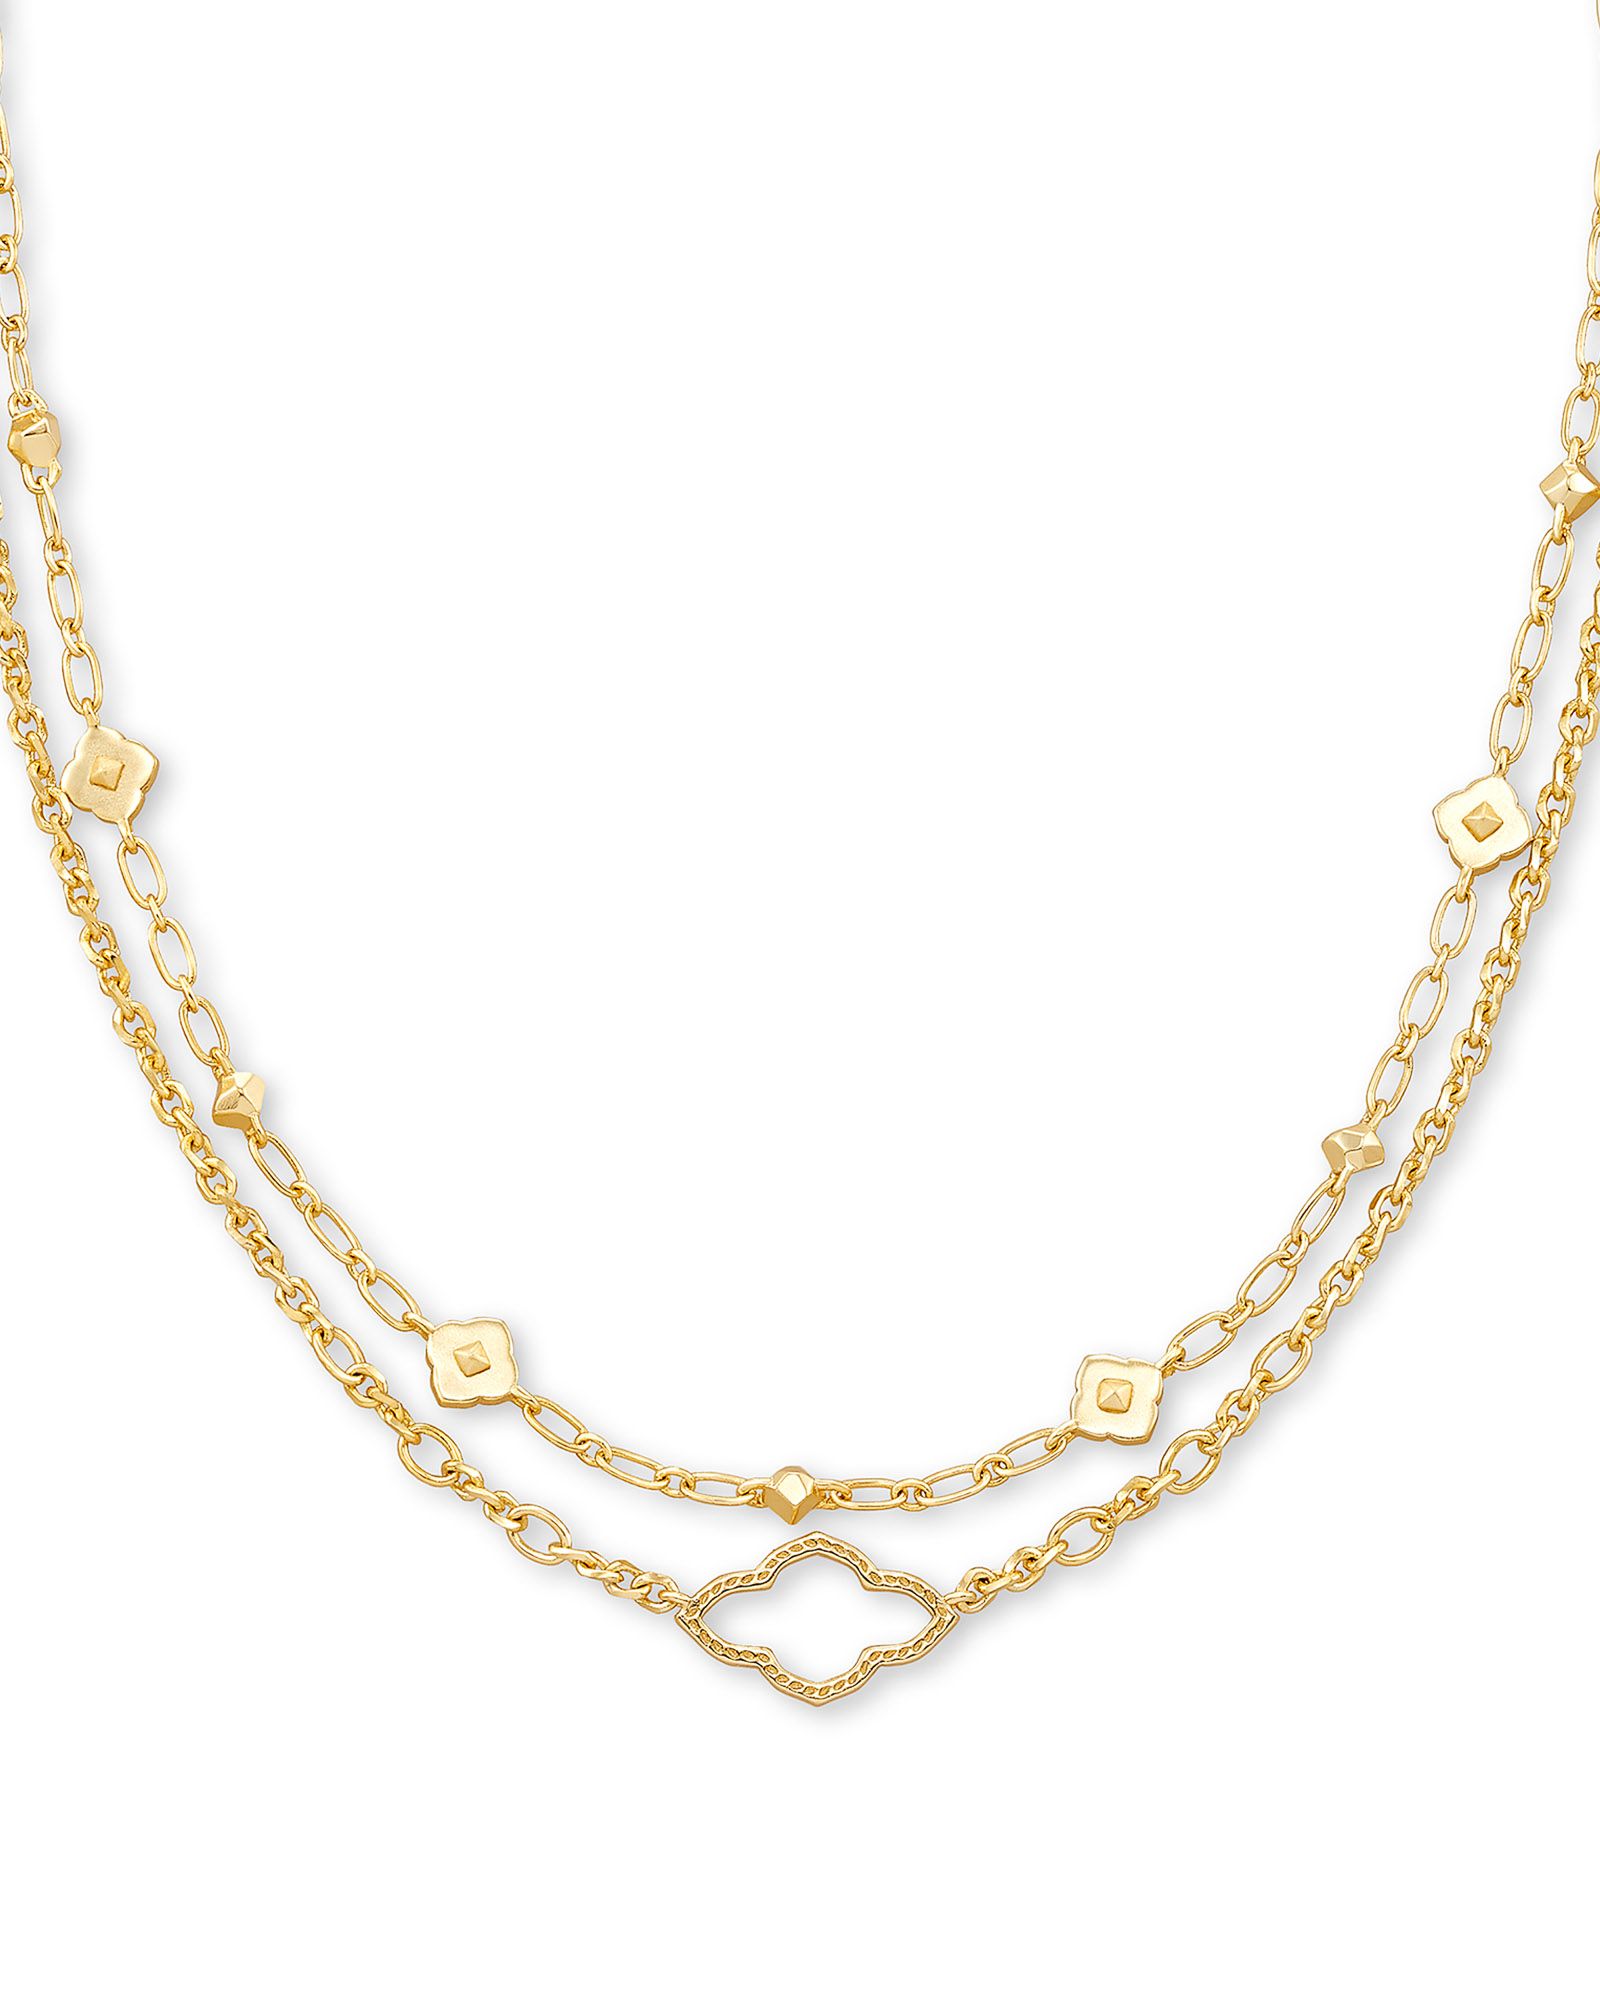 Abbie Multi Strand Necklace in Gold | Kendra Scott